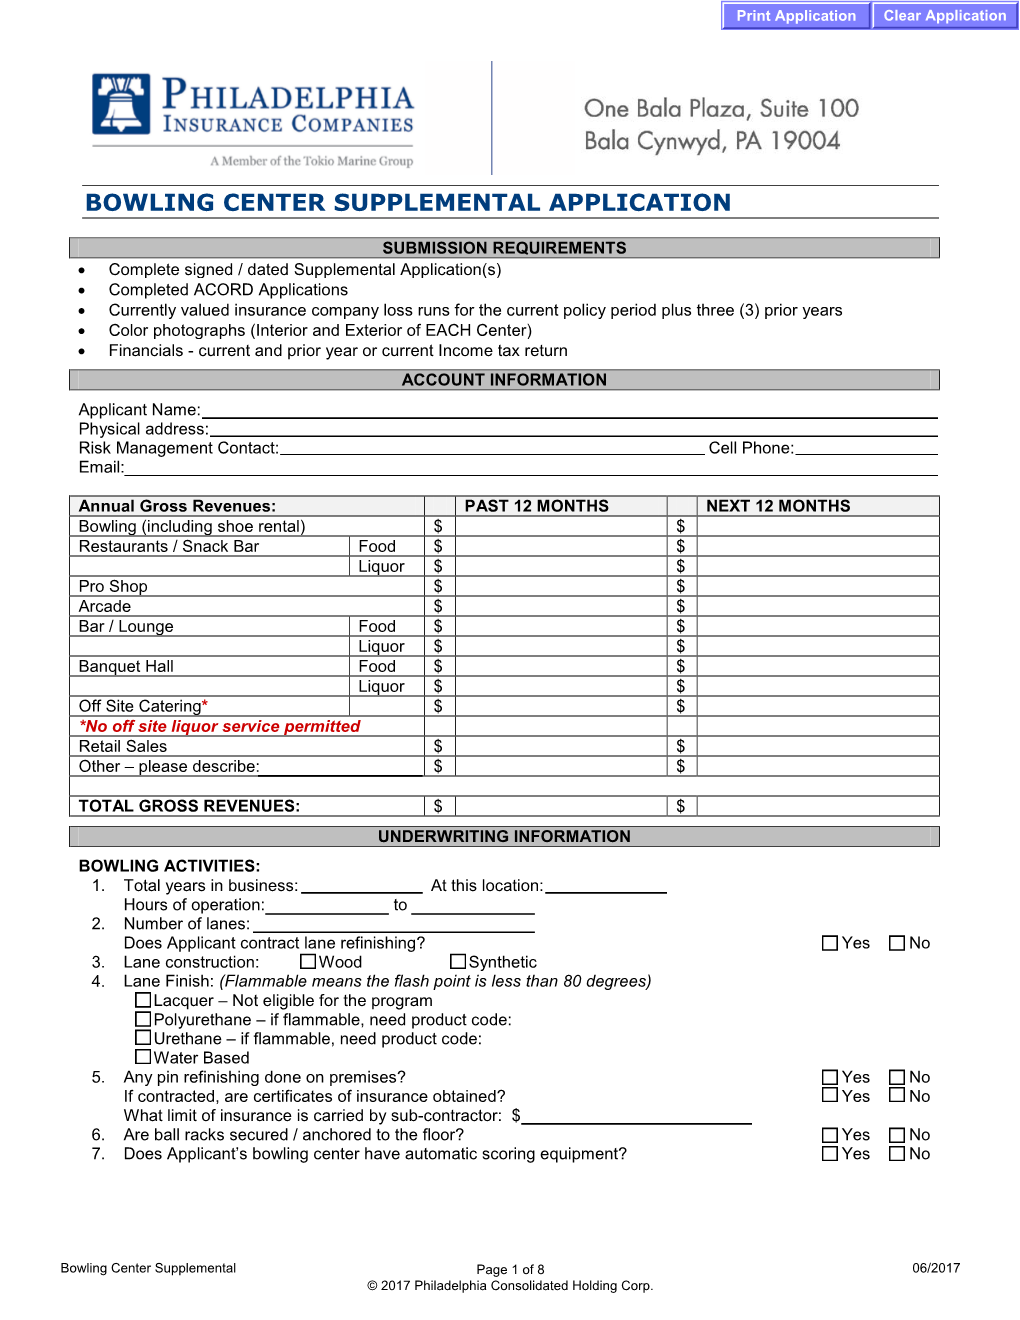 Bowling Center Supplemental Application